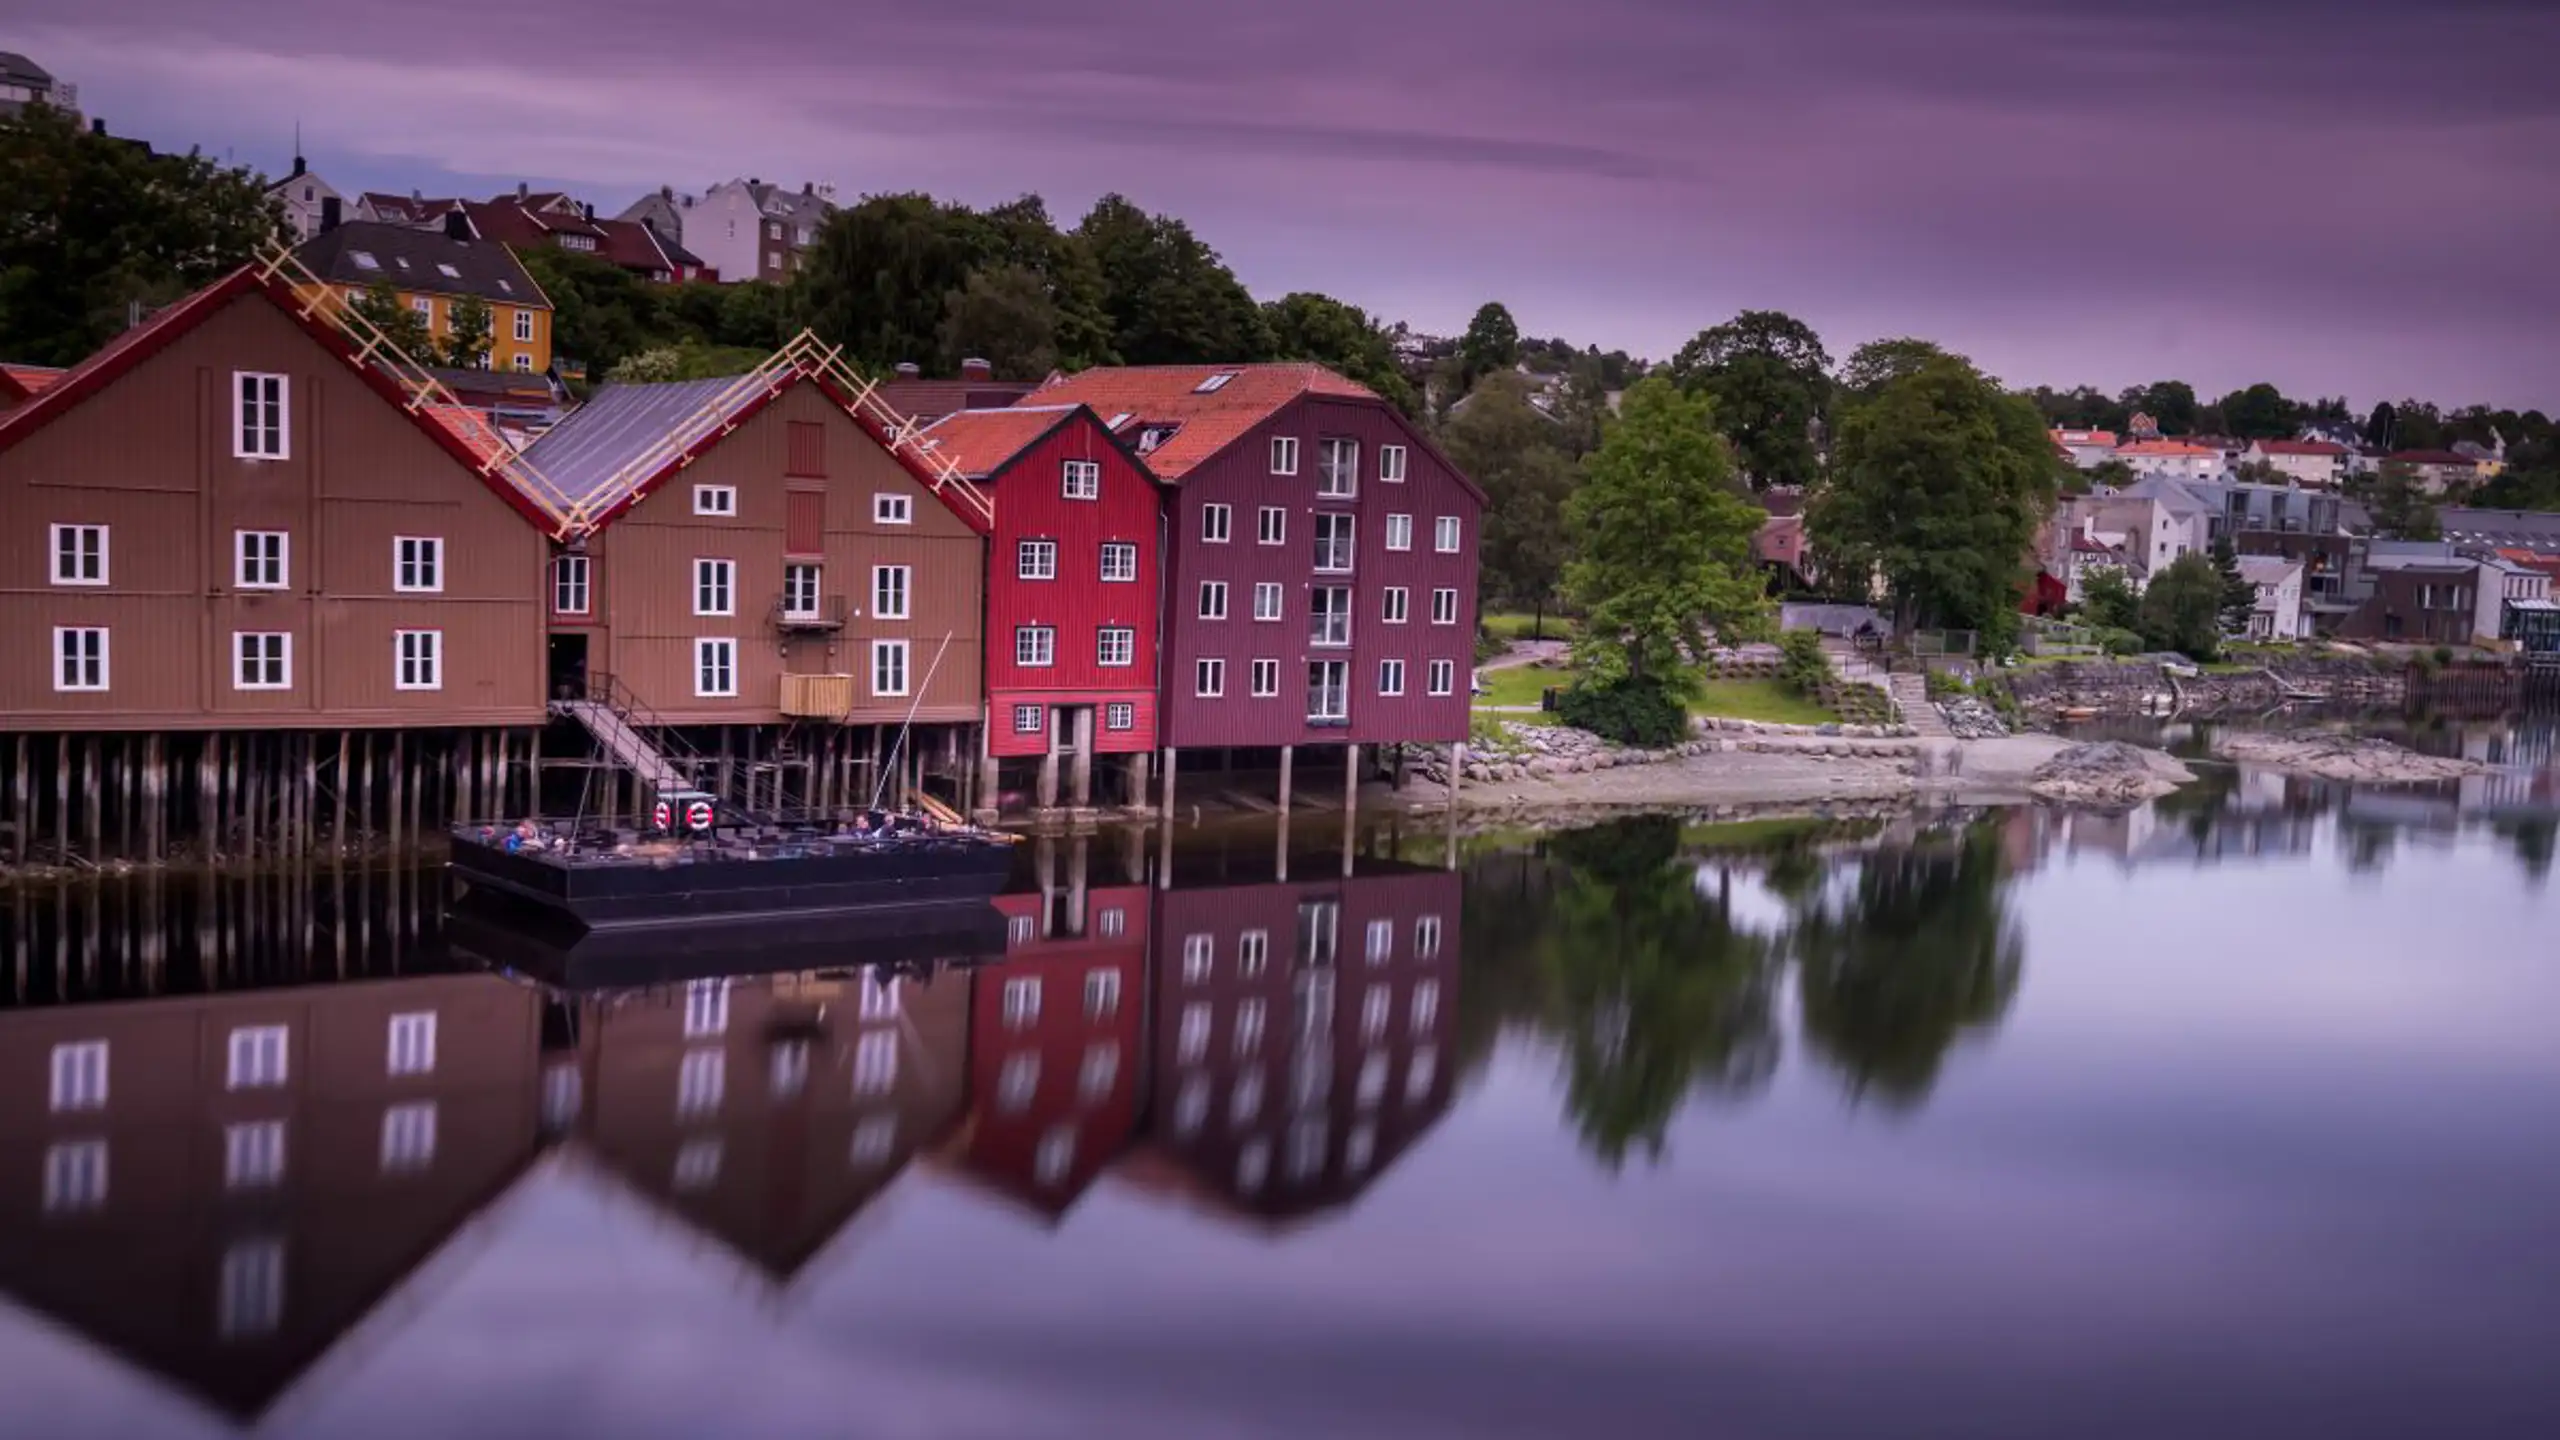 Trondheim City In Norway 2023 11 27 05 08 50 Utc (1)